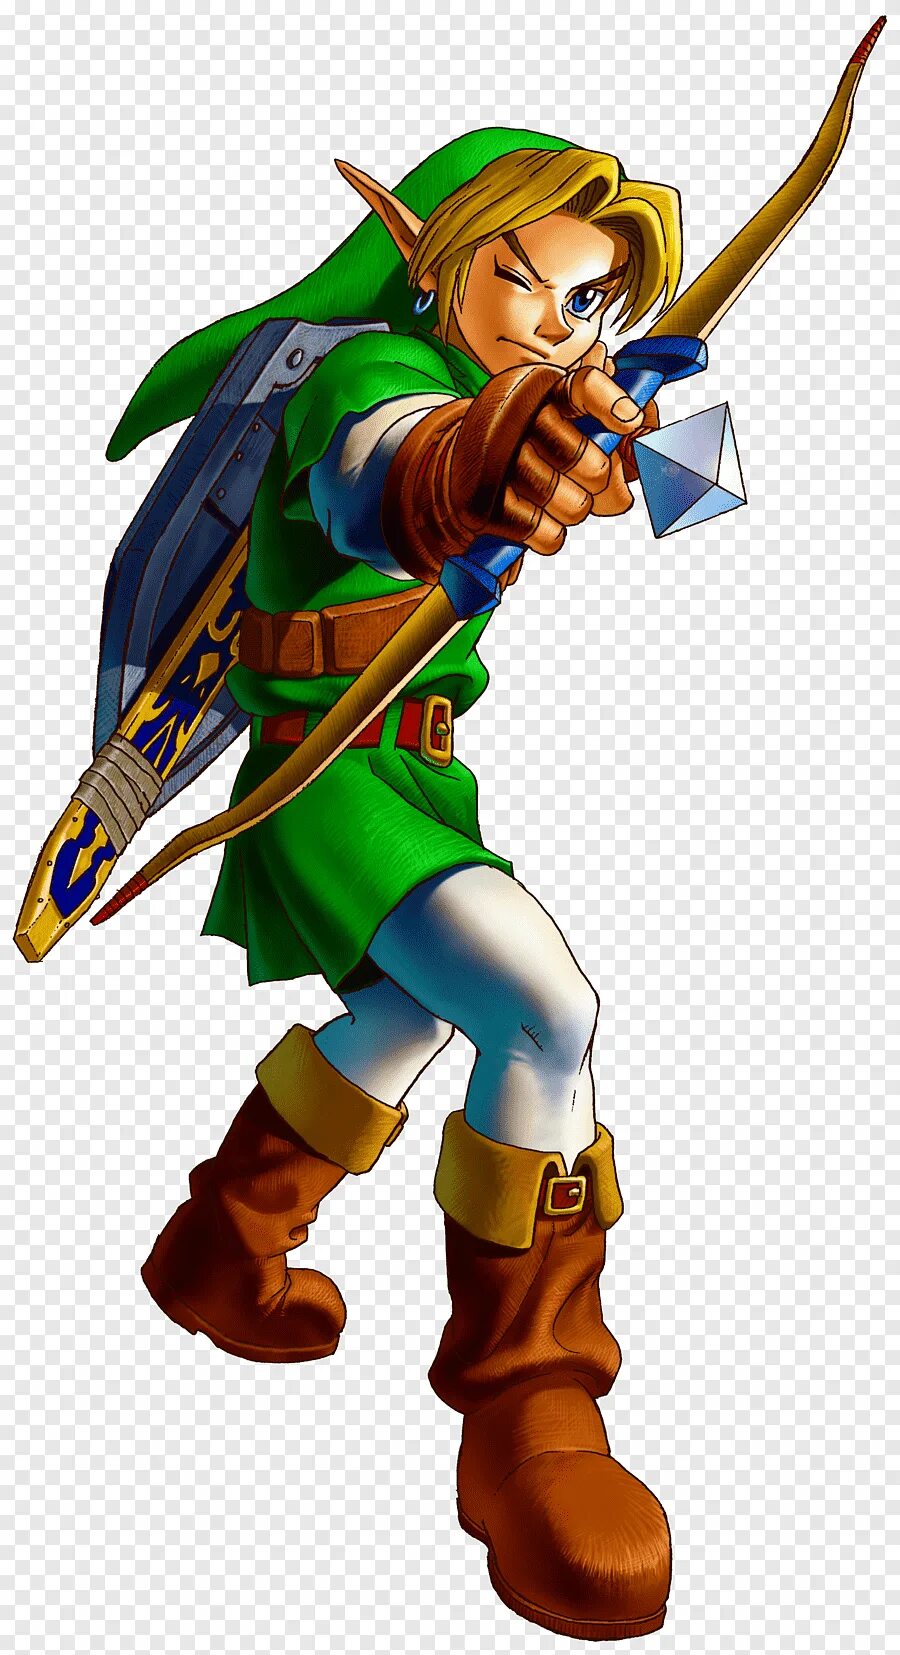 Линк Ocarina of time арт. Линк the Legend of Zelda. Зельда Ocarina of time. Линк из the Legend of Zelda Ocarina of time.